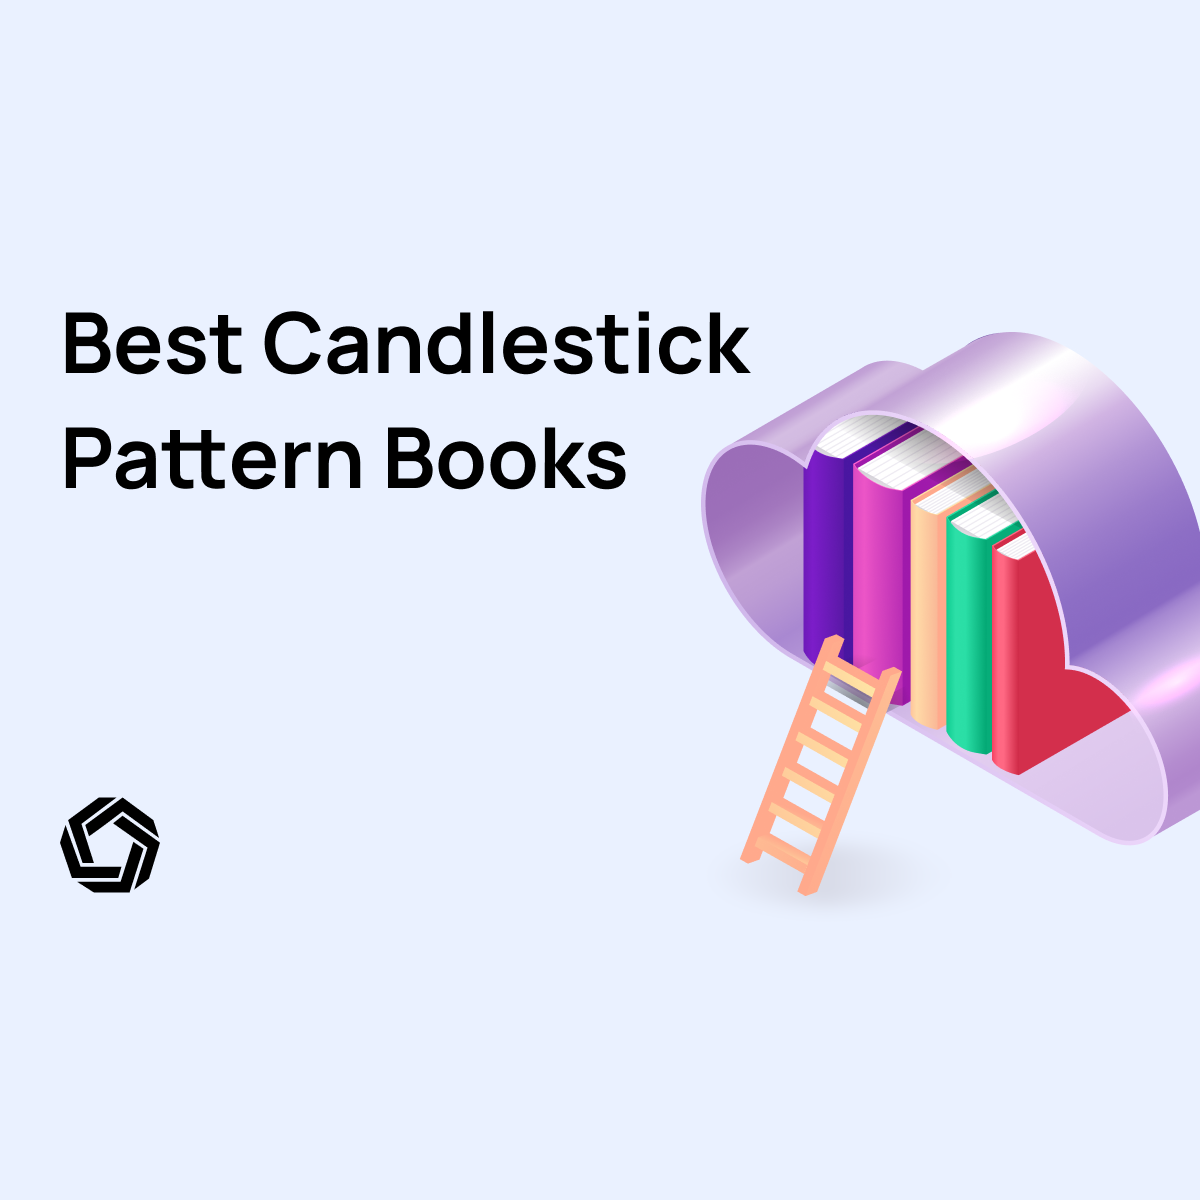 Best Candlestick Pattern Books